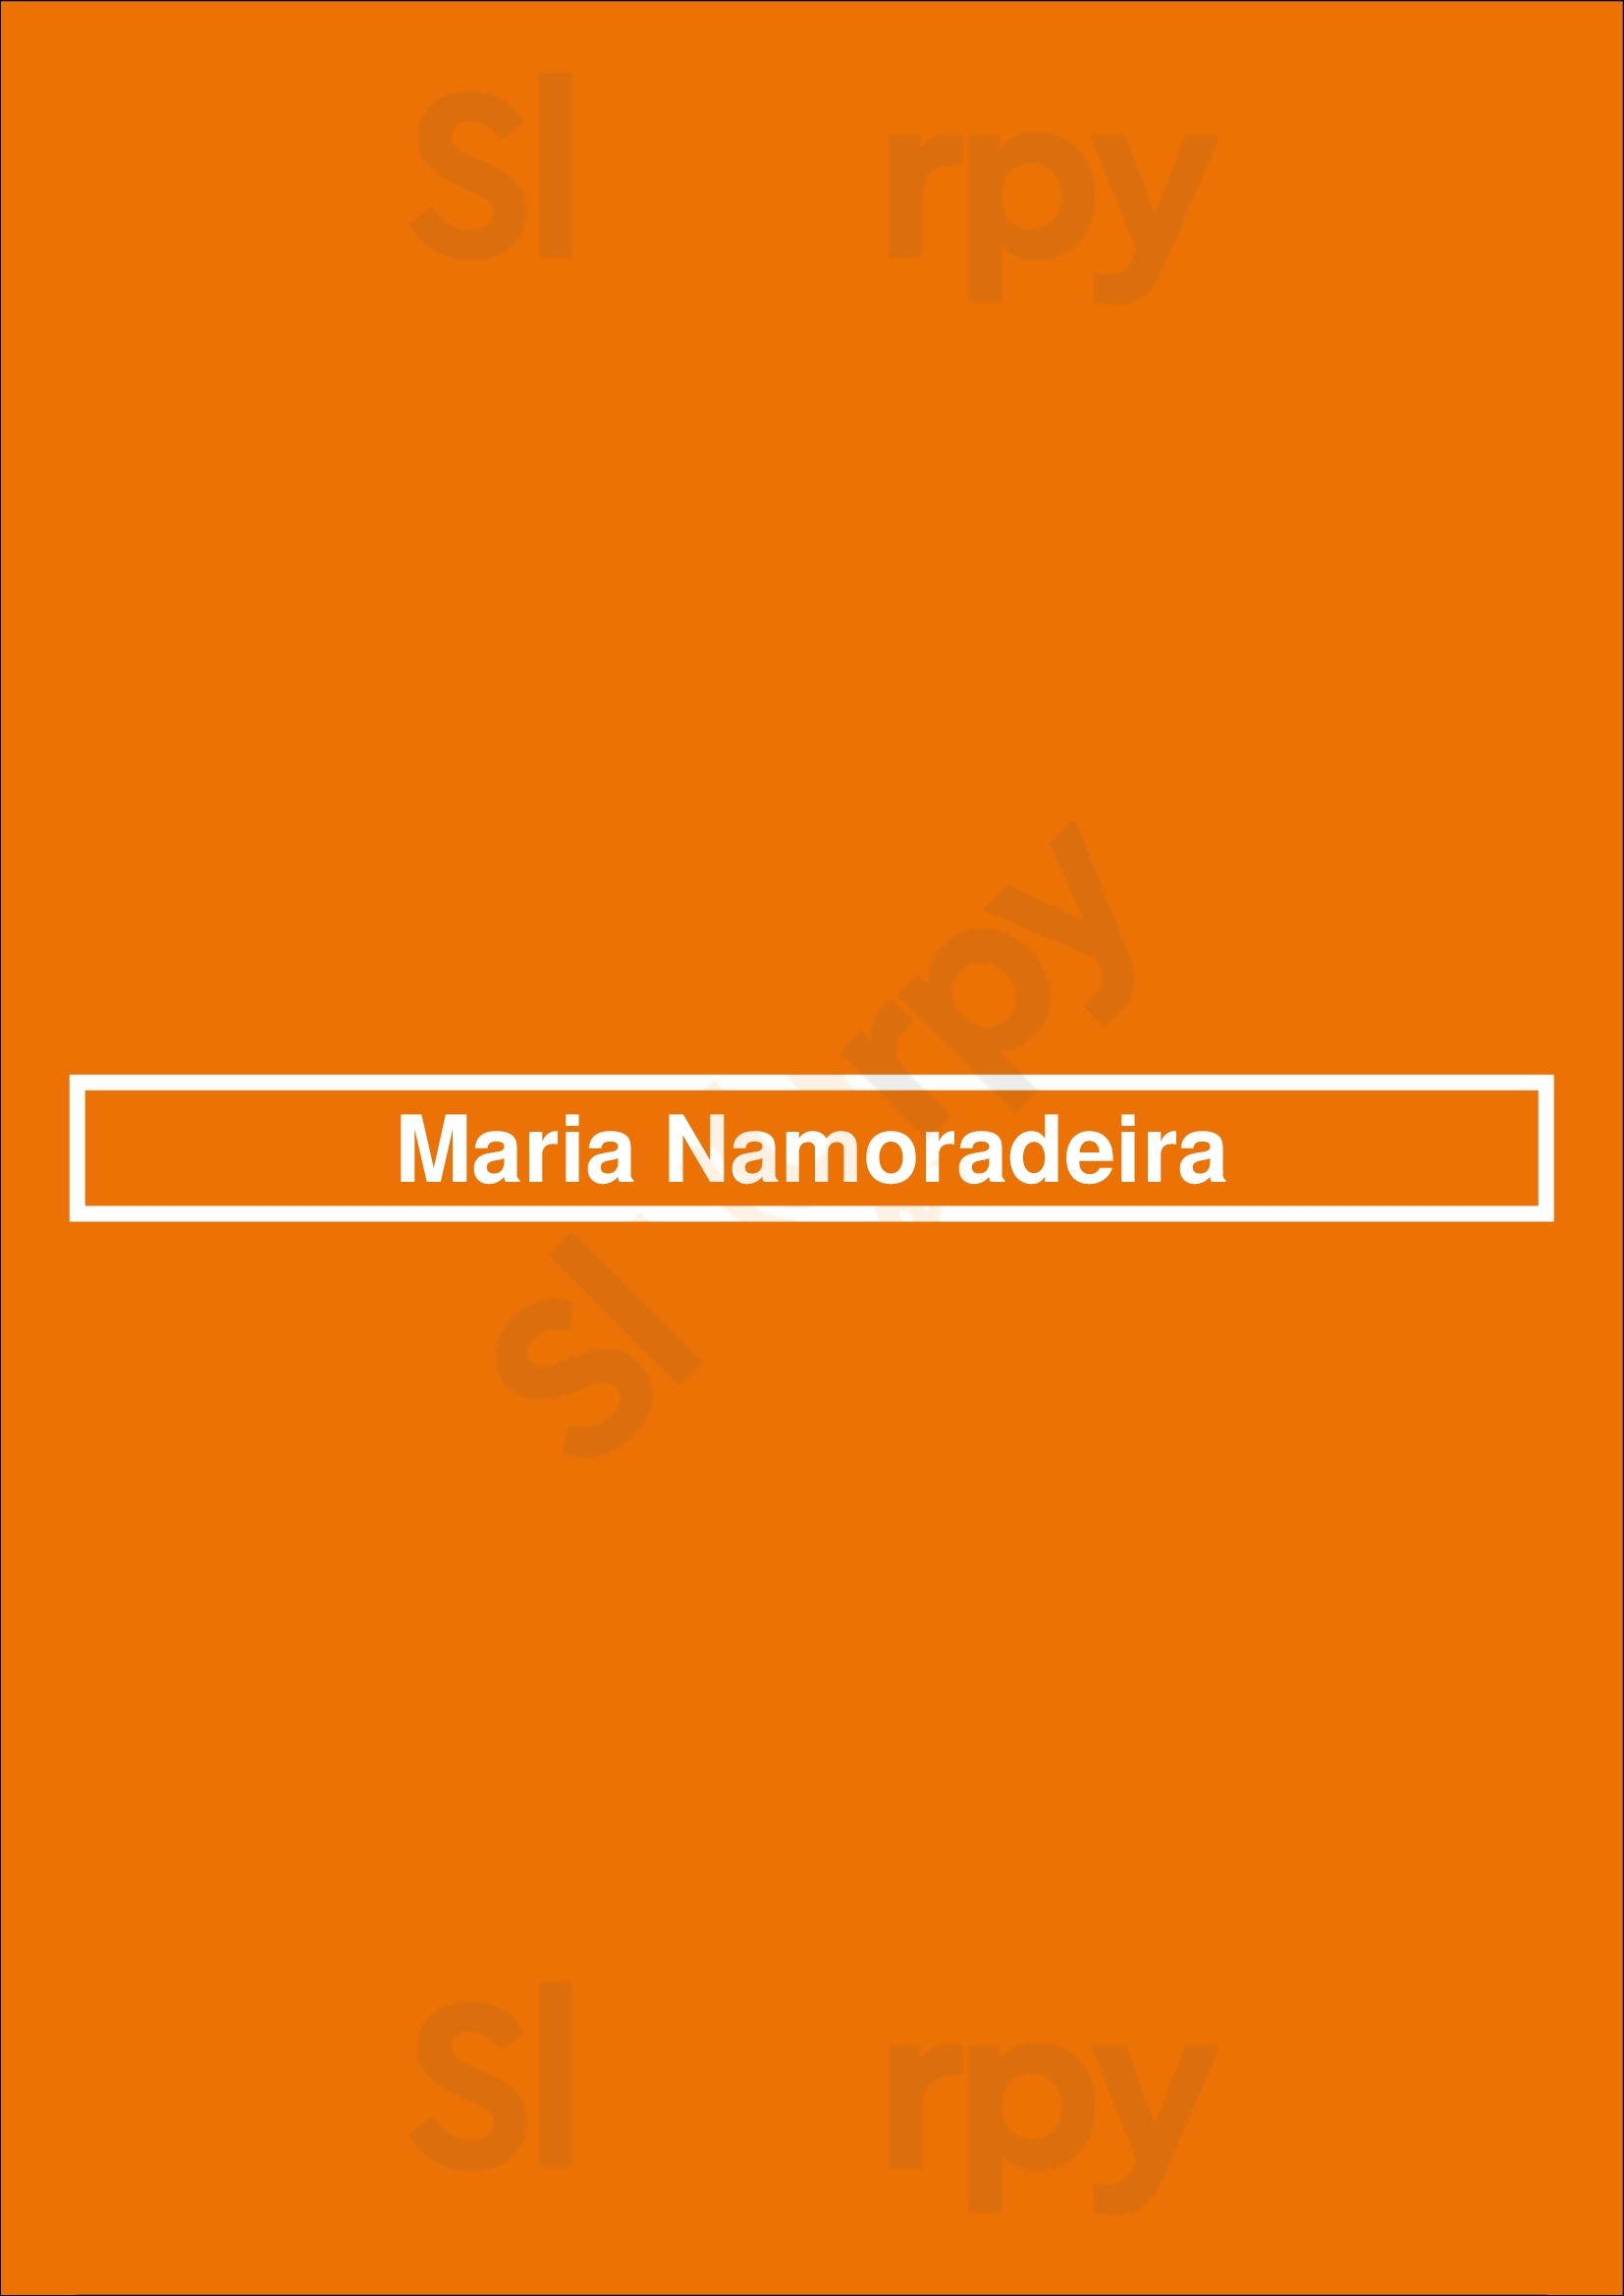 Maria Namoradeira São Paulo Menu - 1